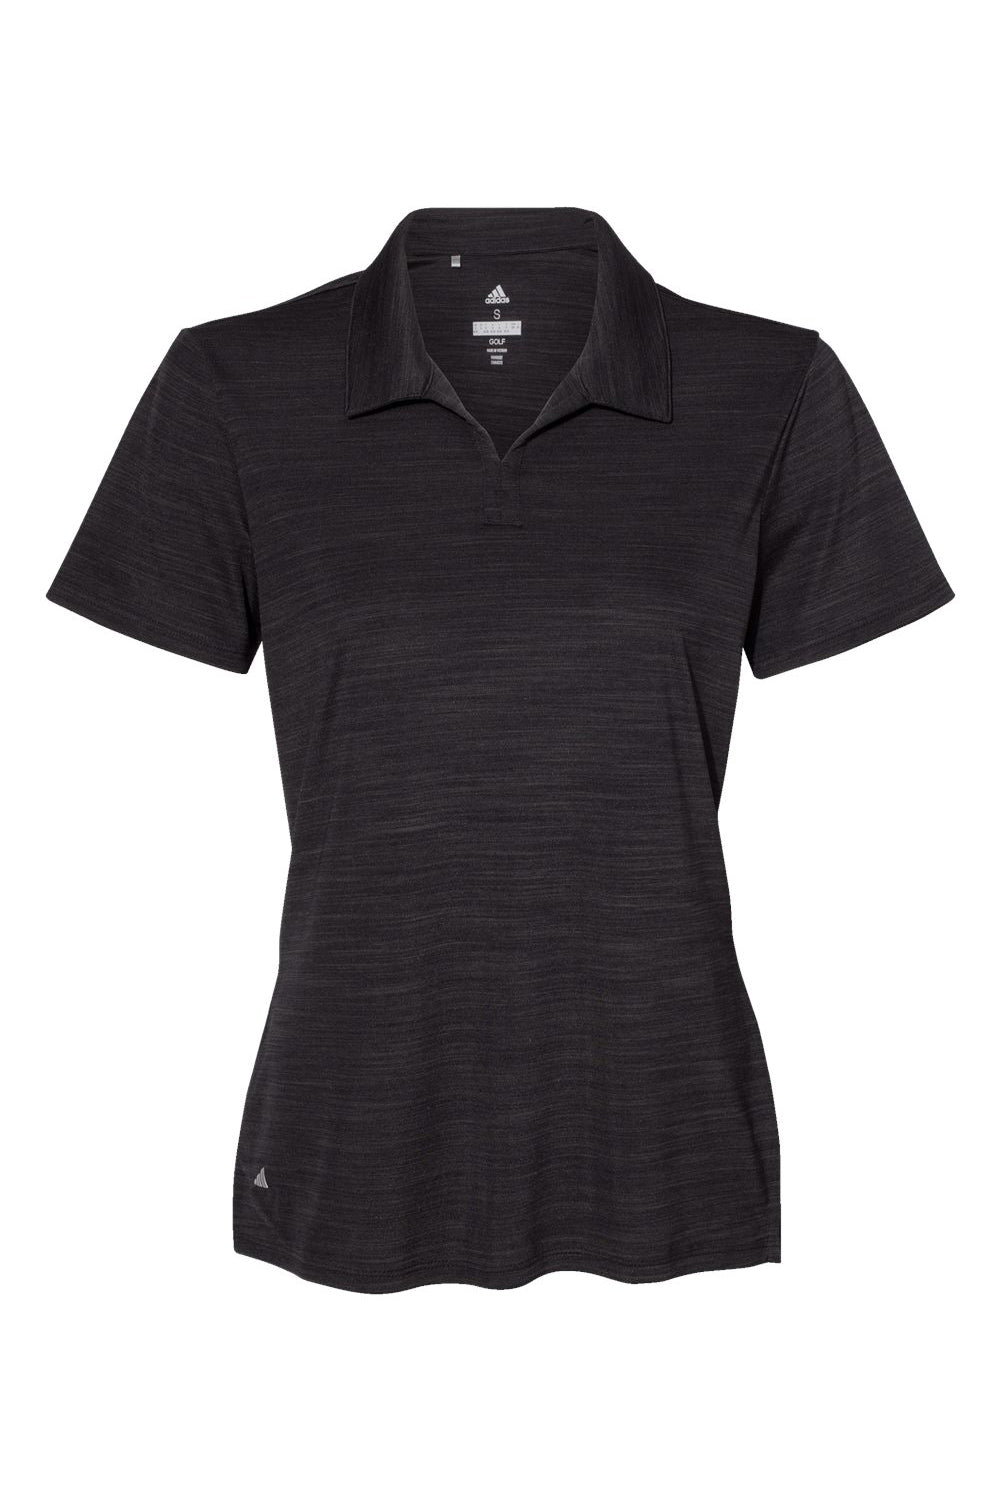 Adidas A403 Womens Melange Short Sleeve Polo Shirt Black Melange Flat Front